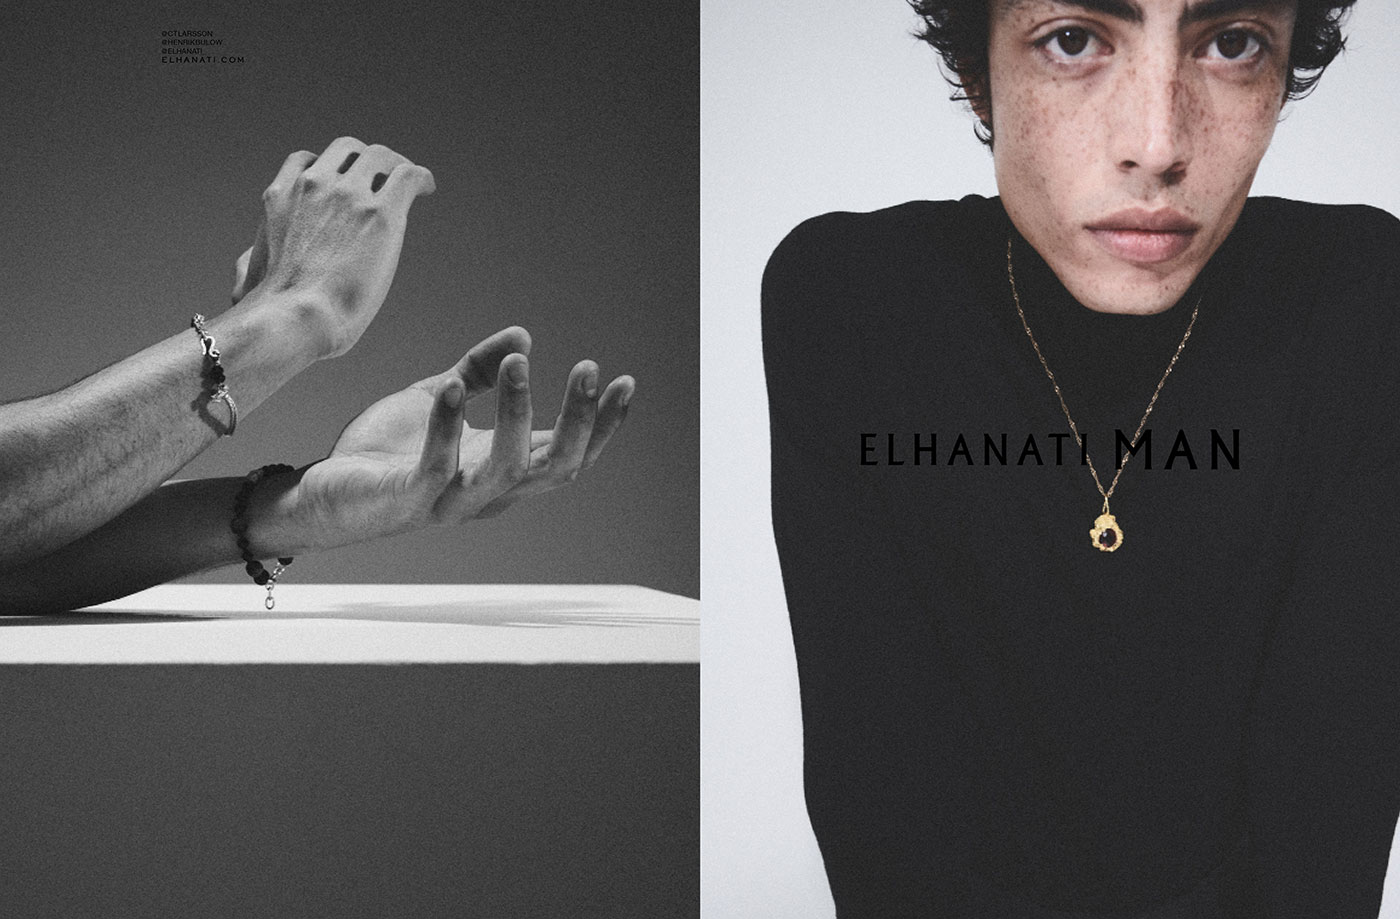 Elhanati Man – Campaign